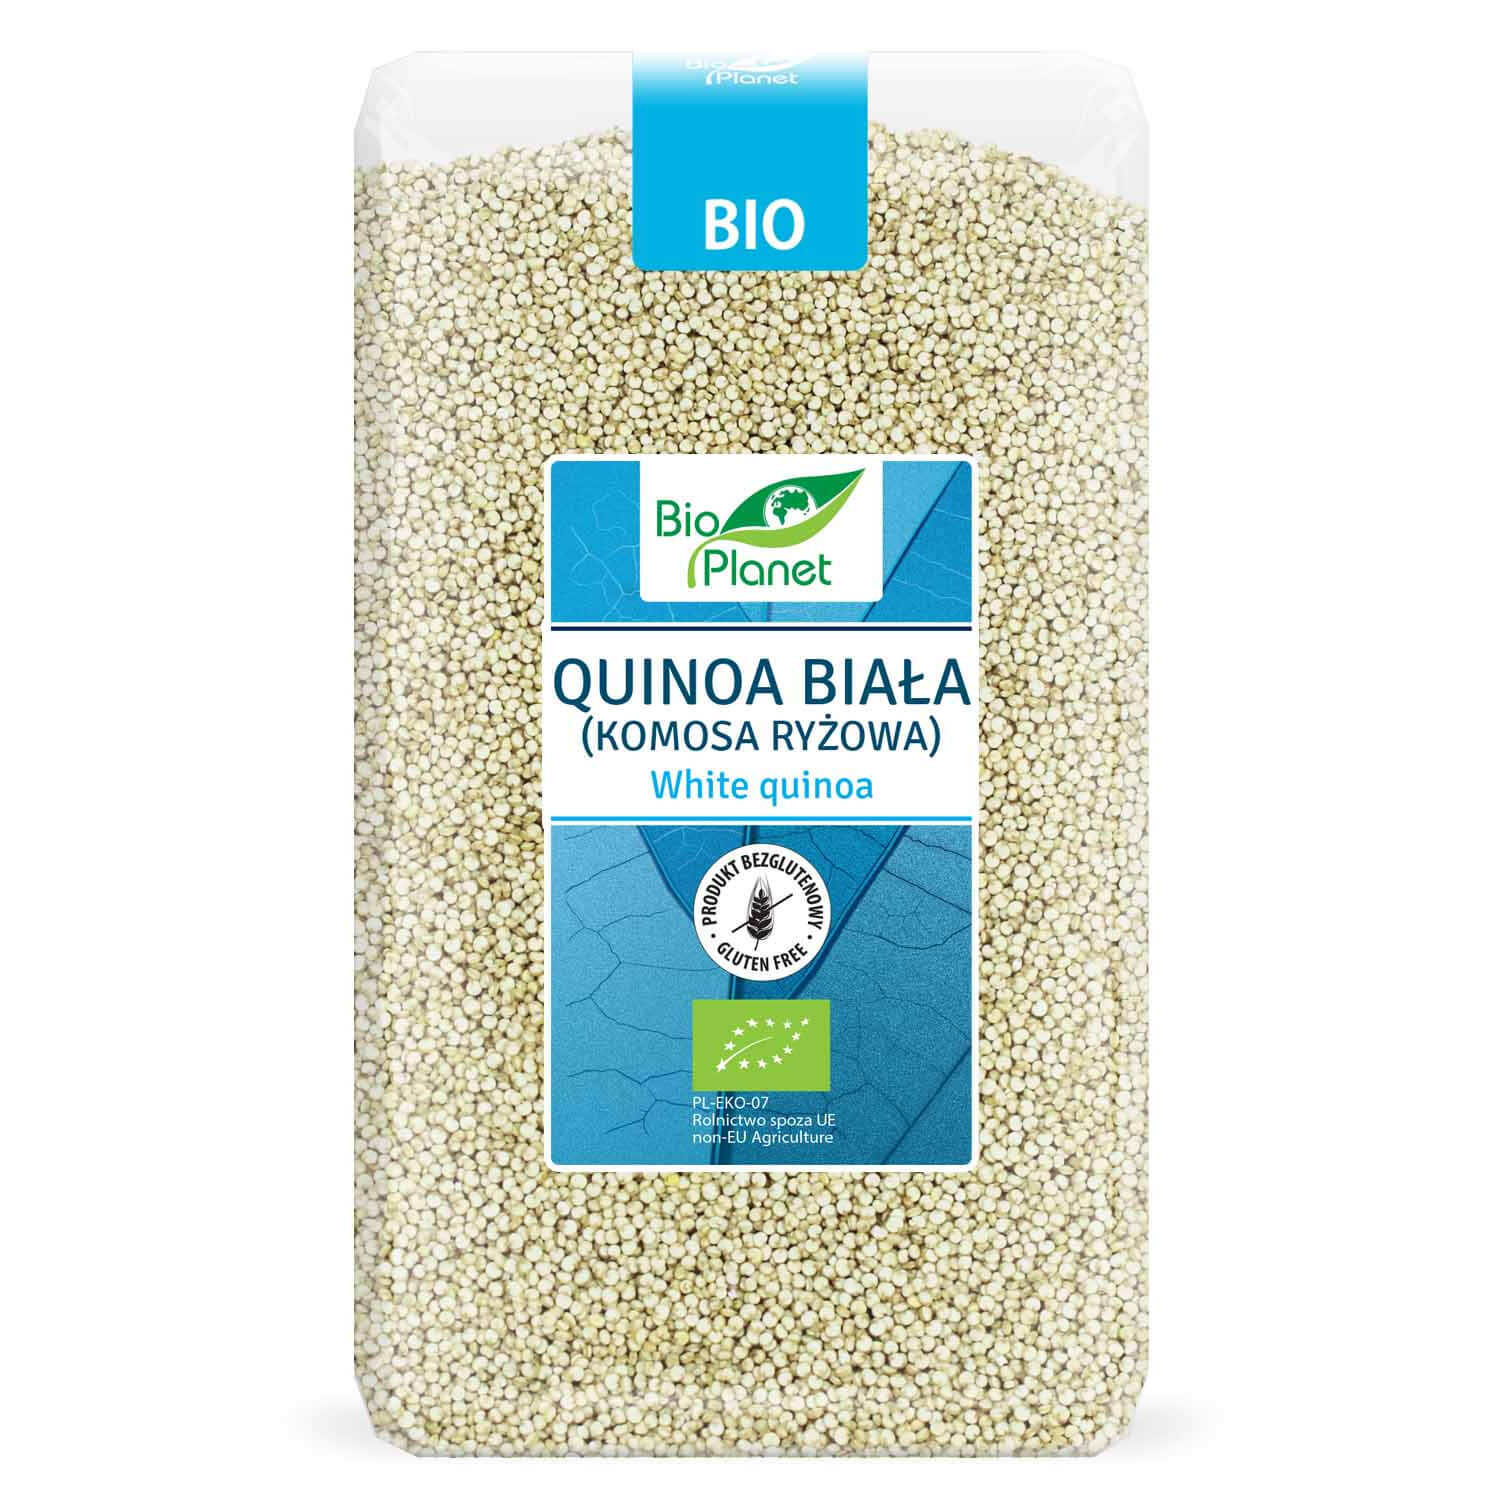 Quinoa biała (komosa ryżowa) BIO 1 kg - Bio Planet